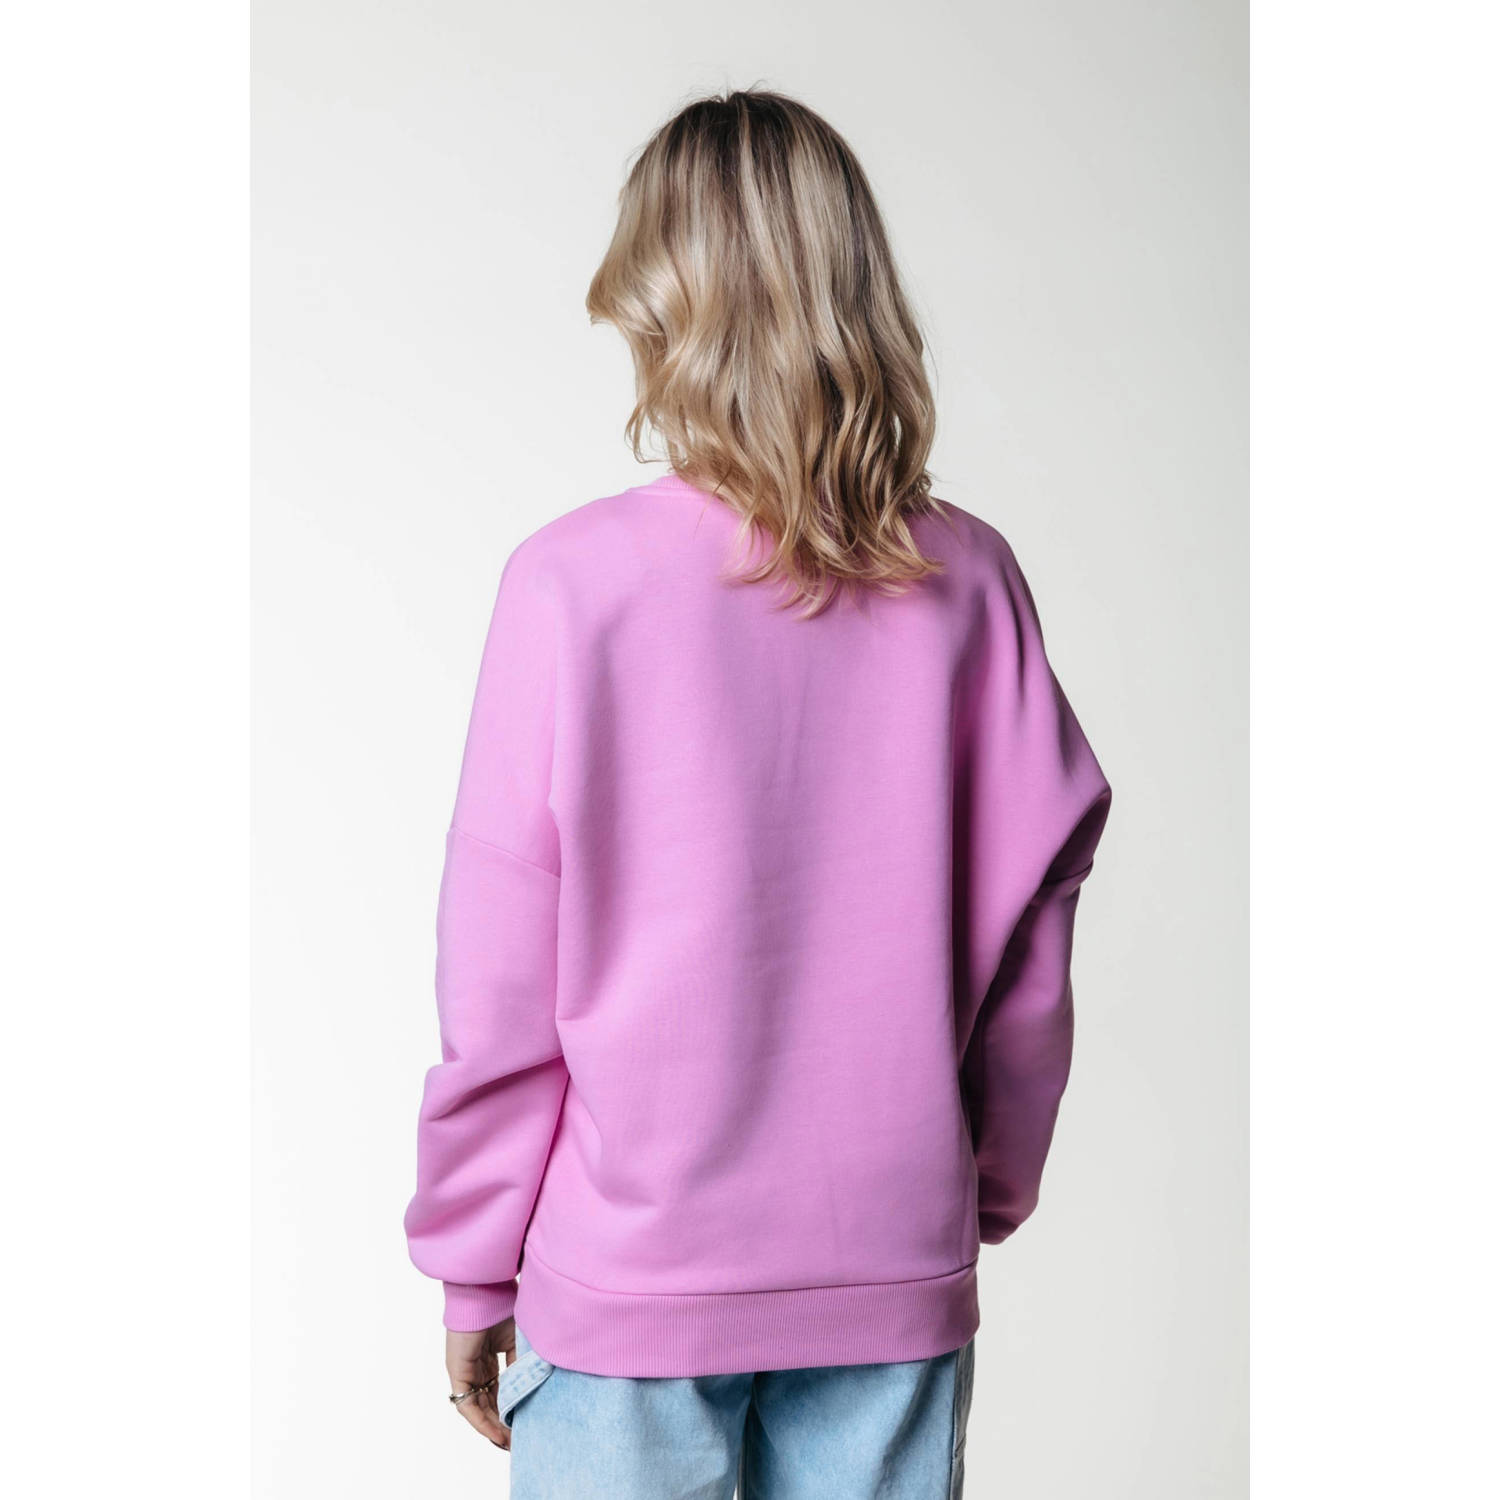 Colourful Rebel sweater Self Love met printopdruk roze